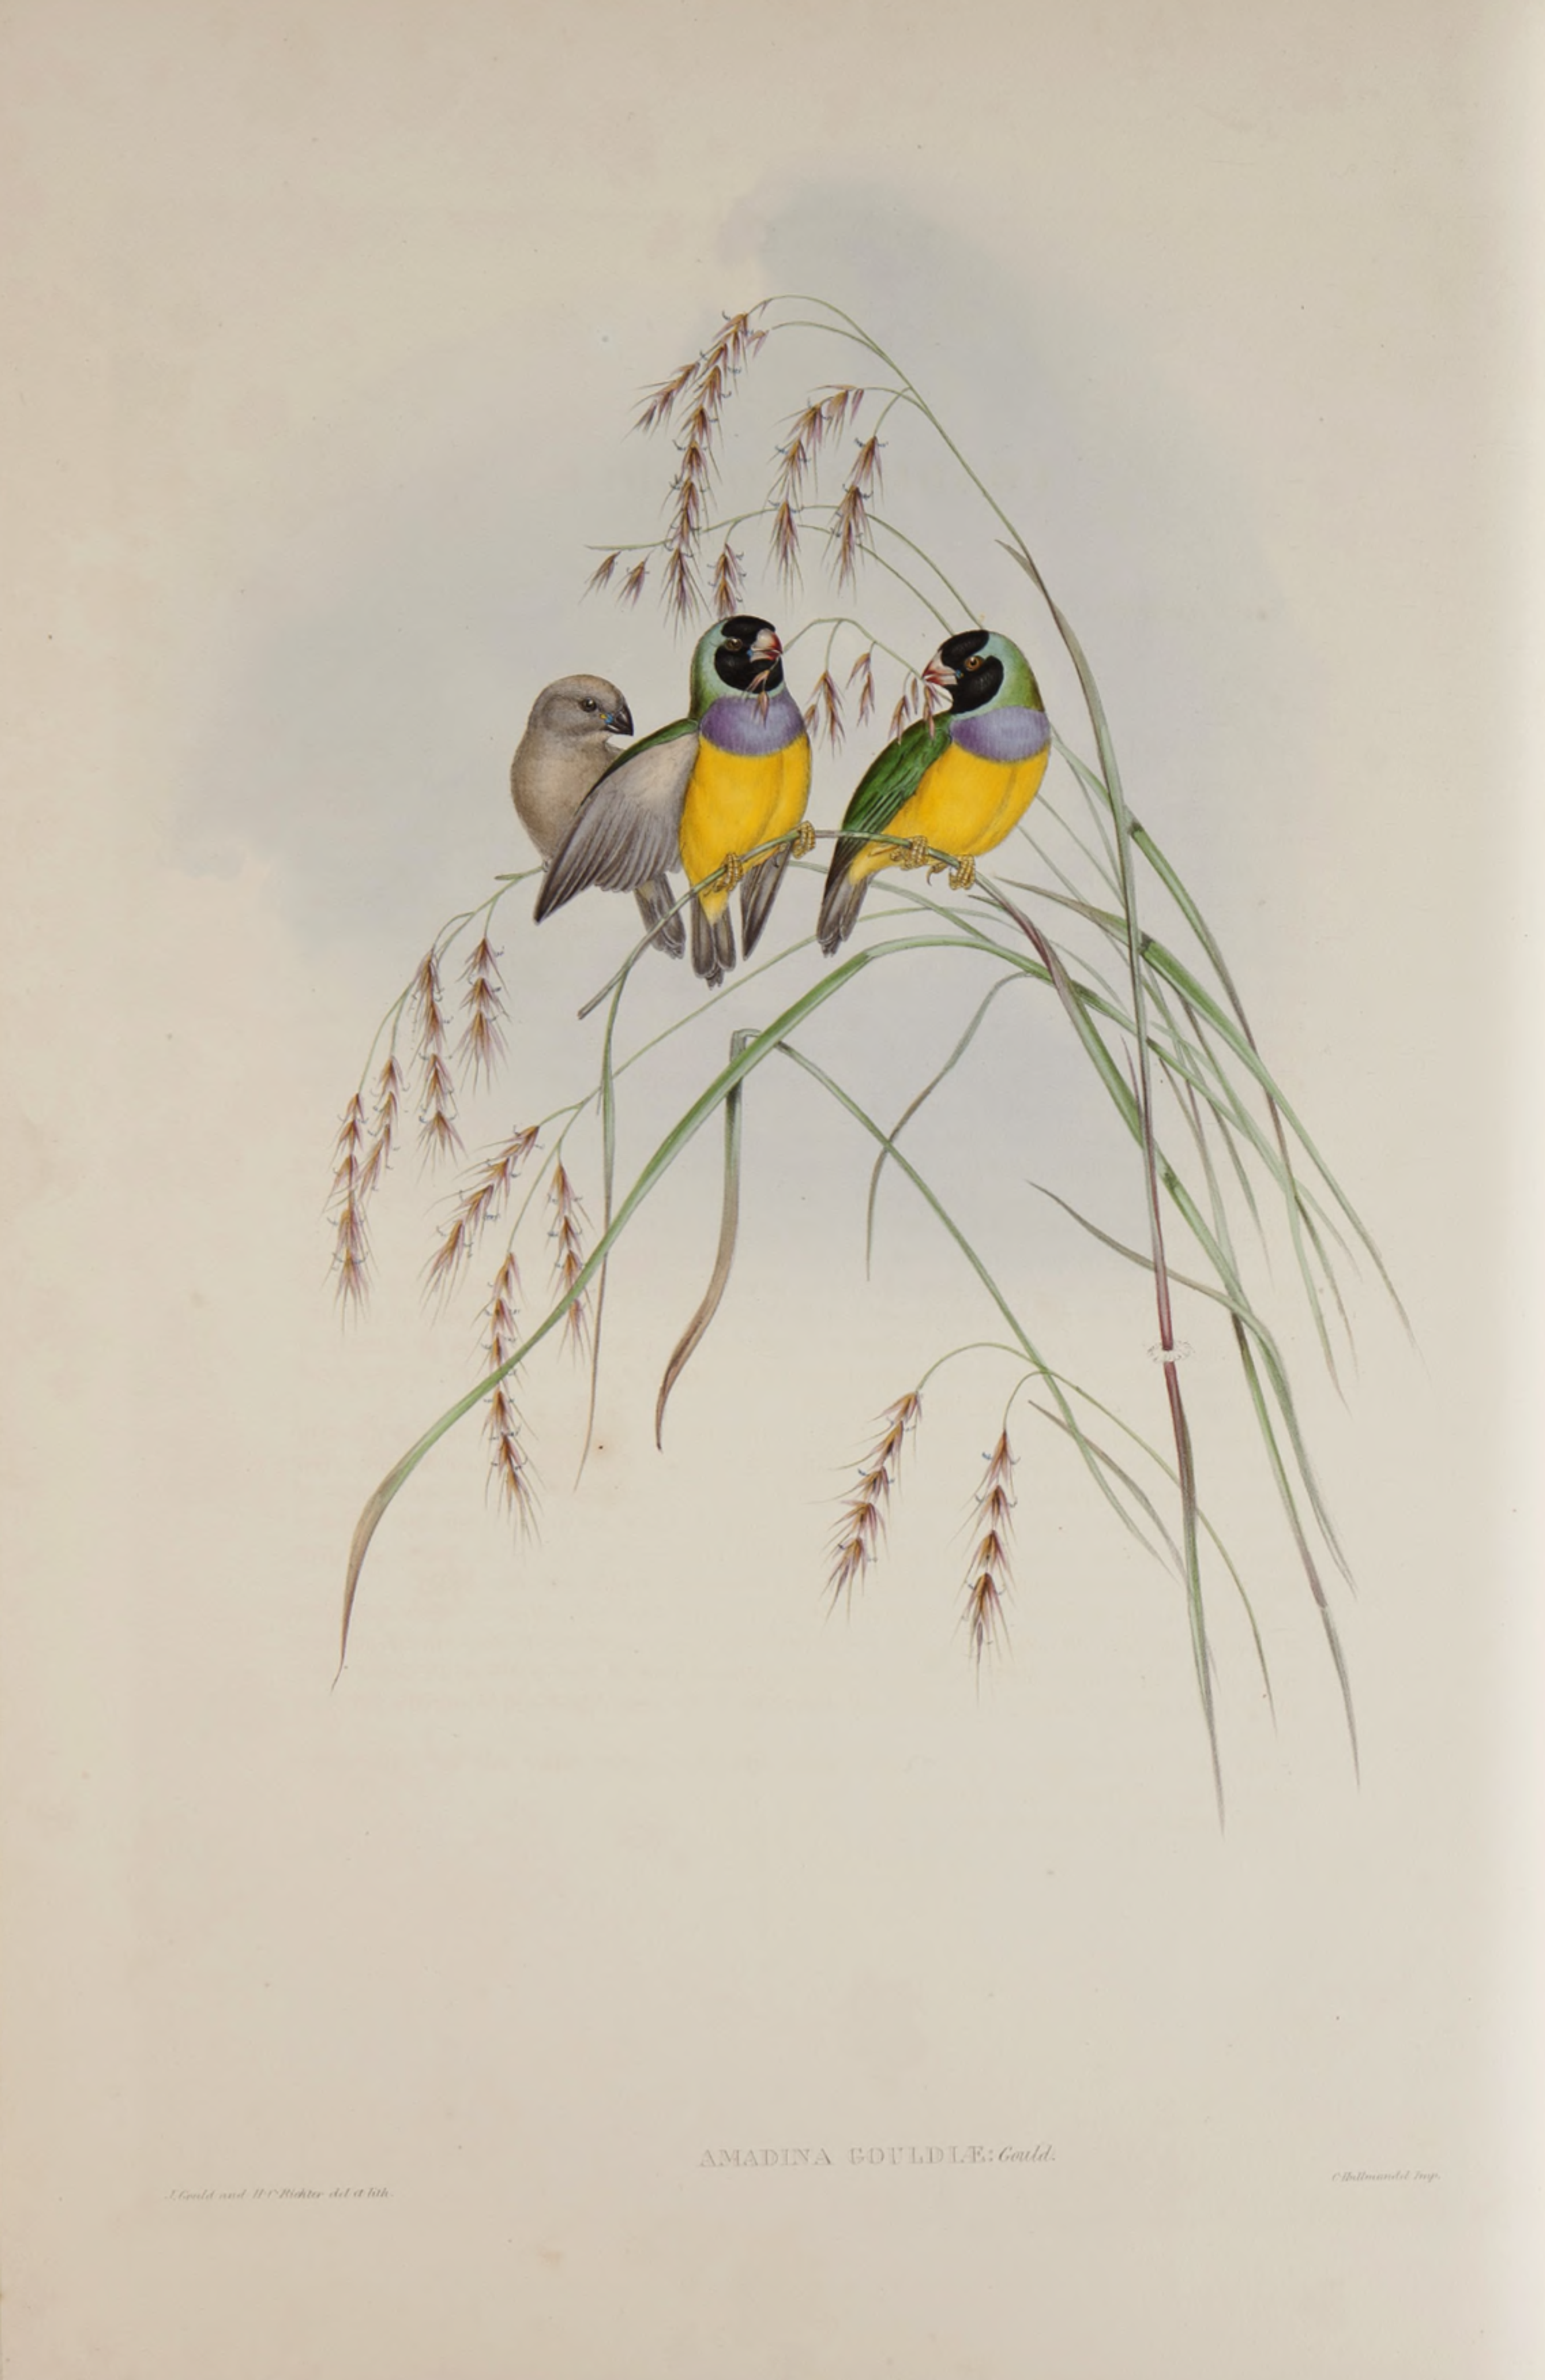 Elizabeth Gould, Amadina Gouldiae in 'The Birds of Australia', 1848-1870.